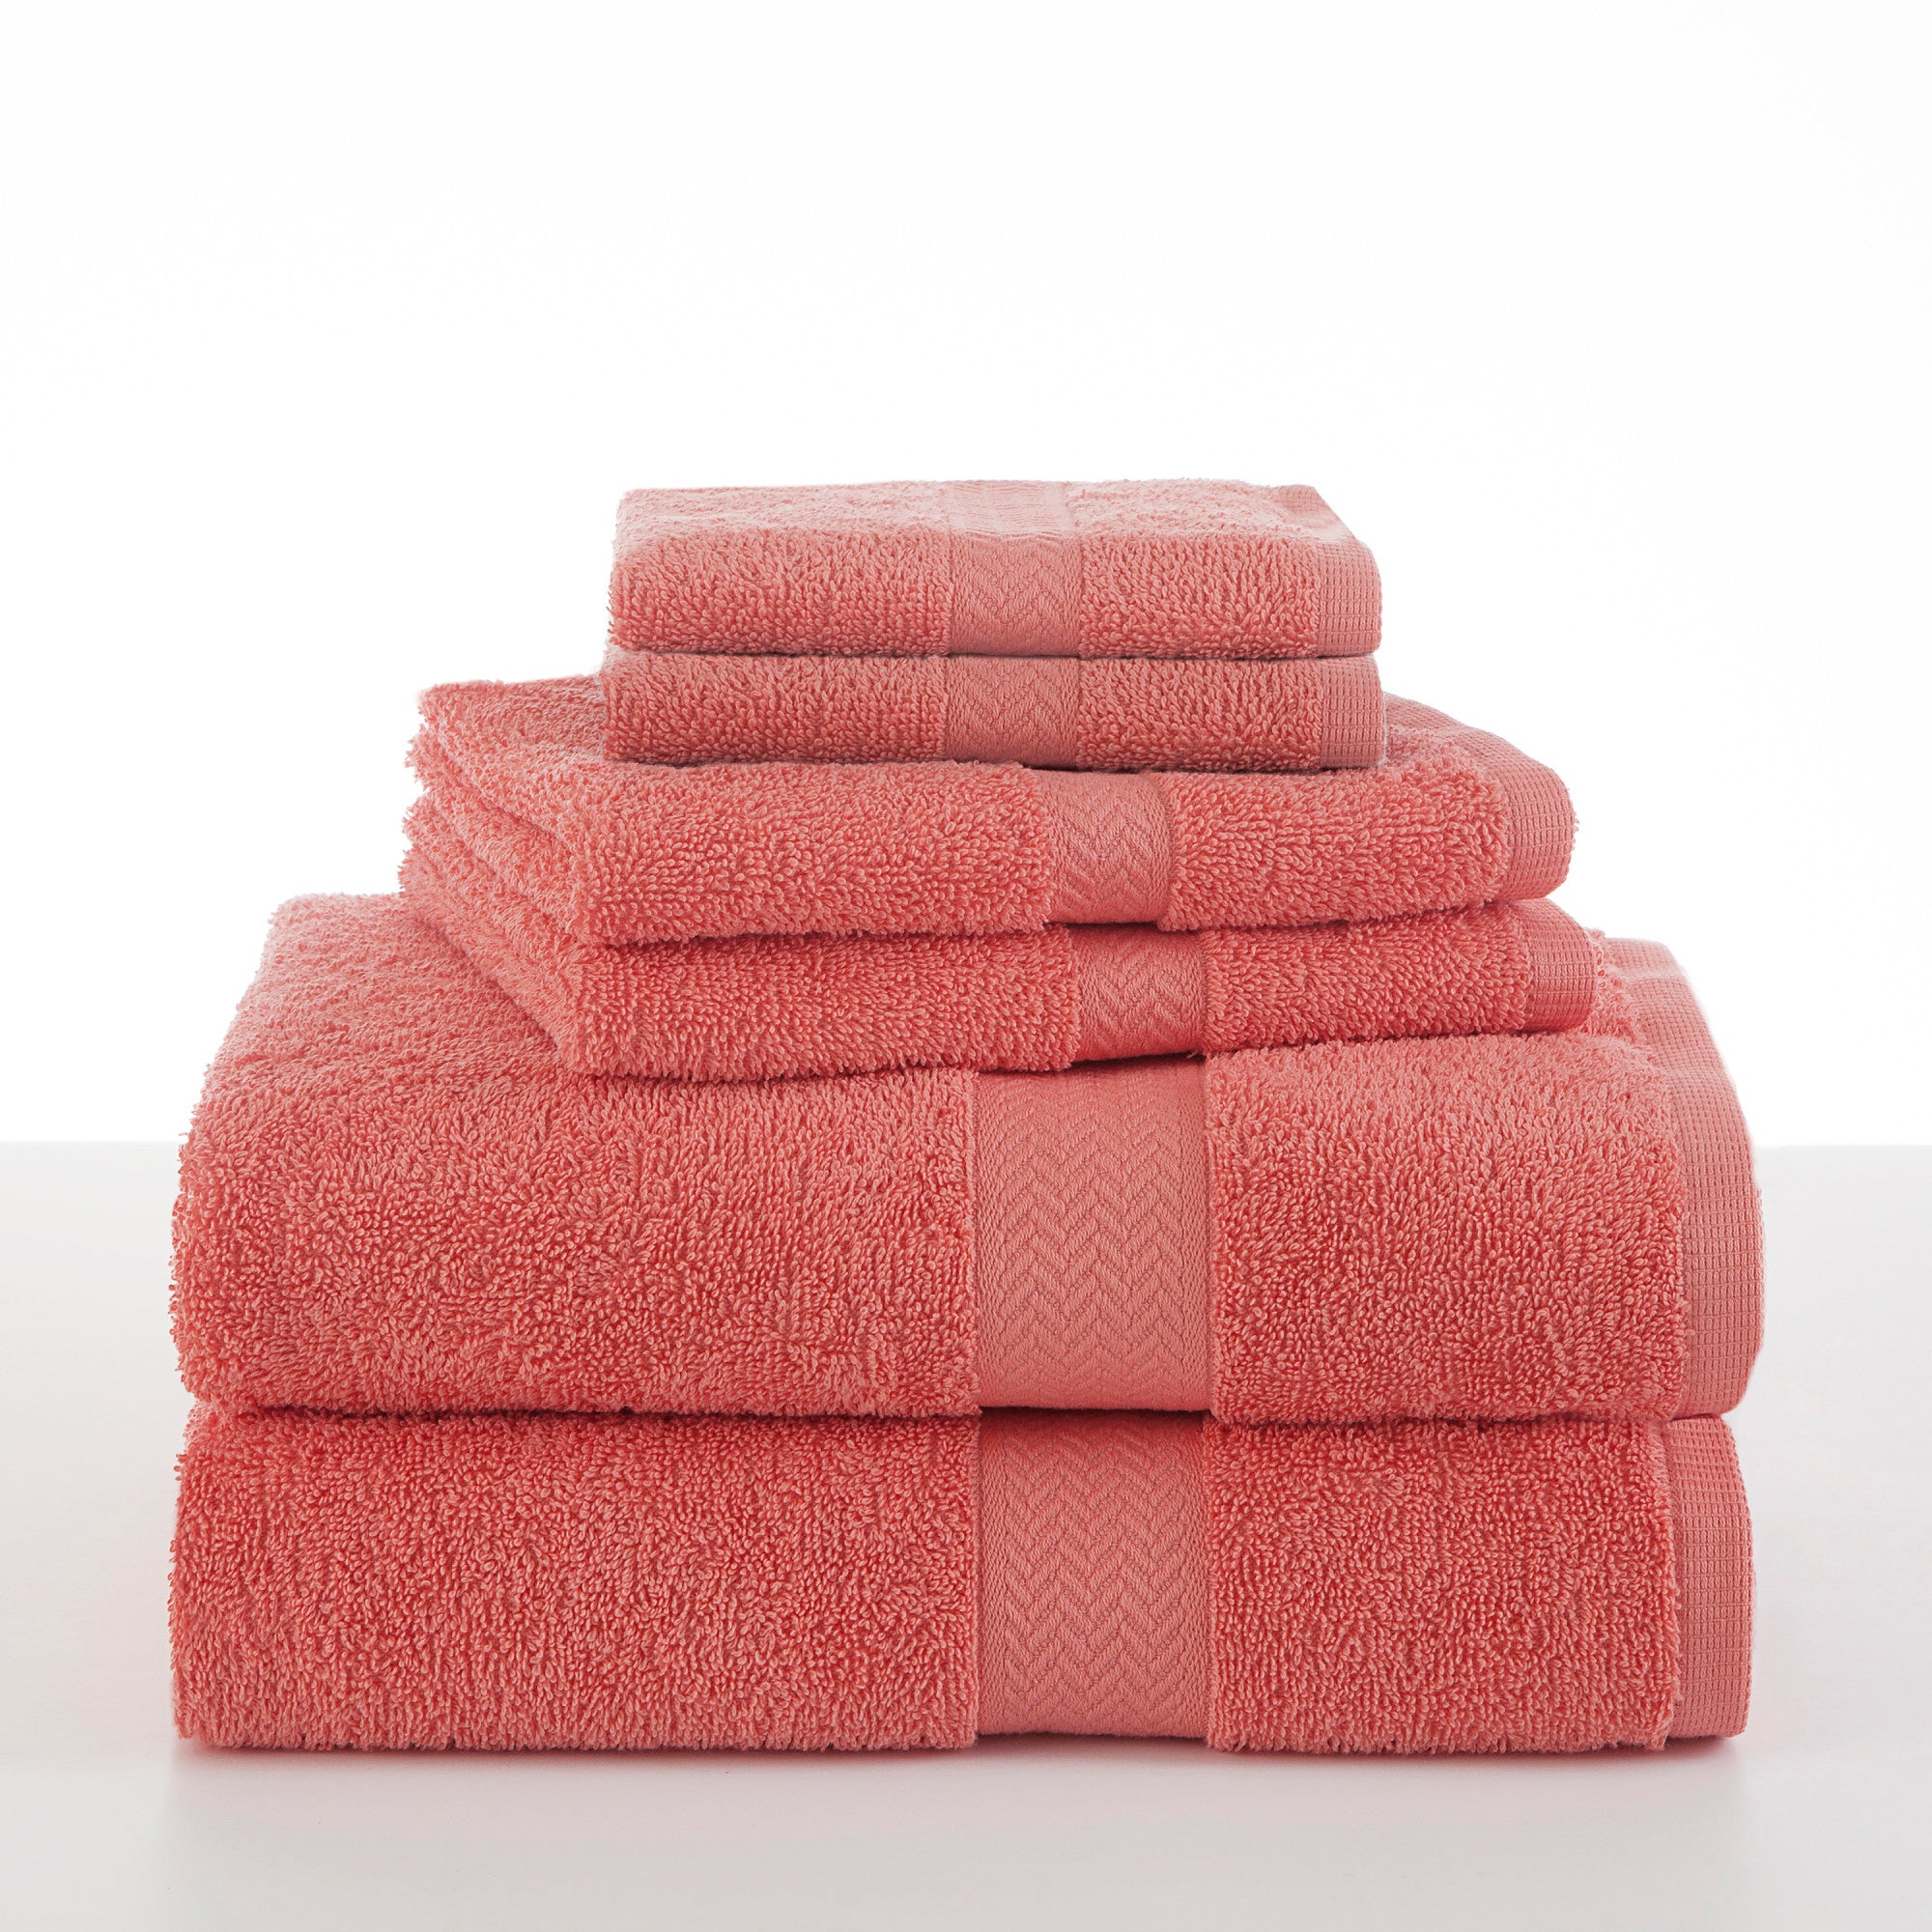 Homgreen Cotton Paradise The Best Brand Awards, 6 Piece Towel Set